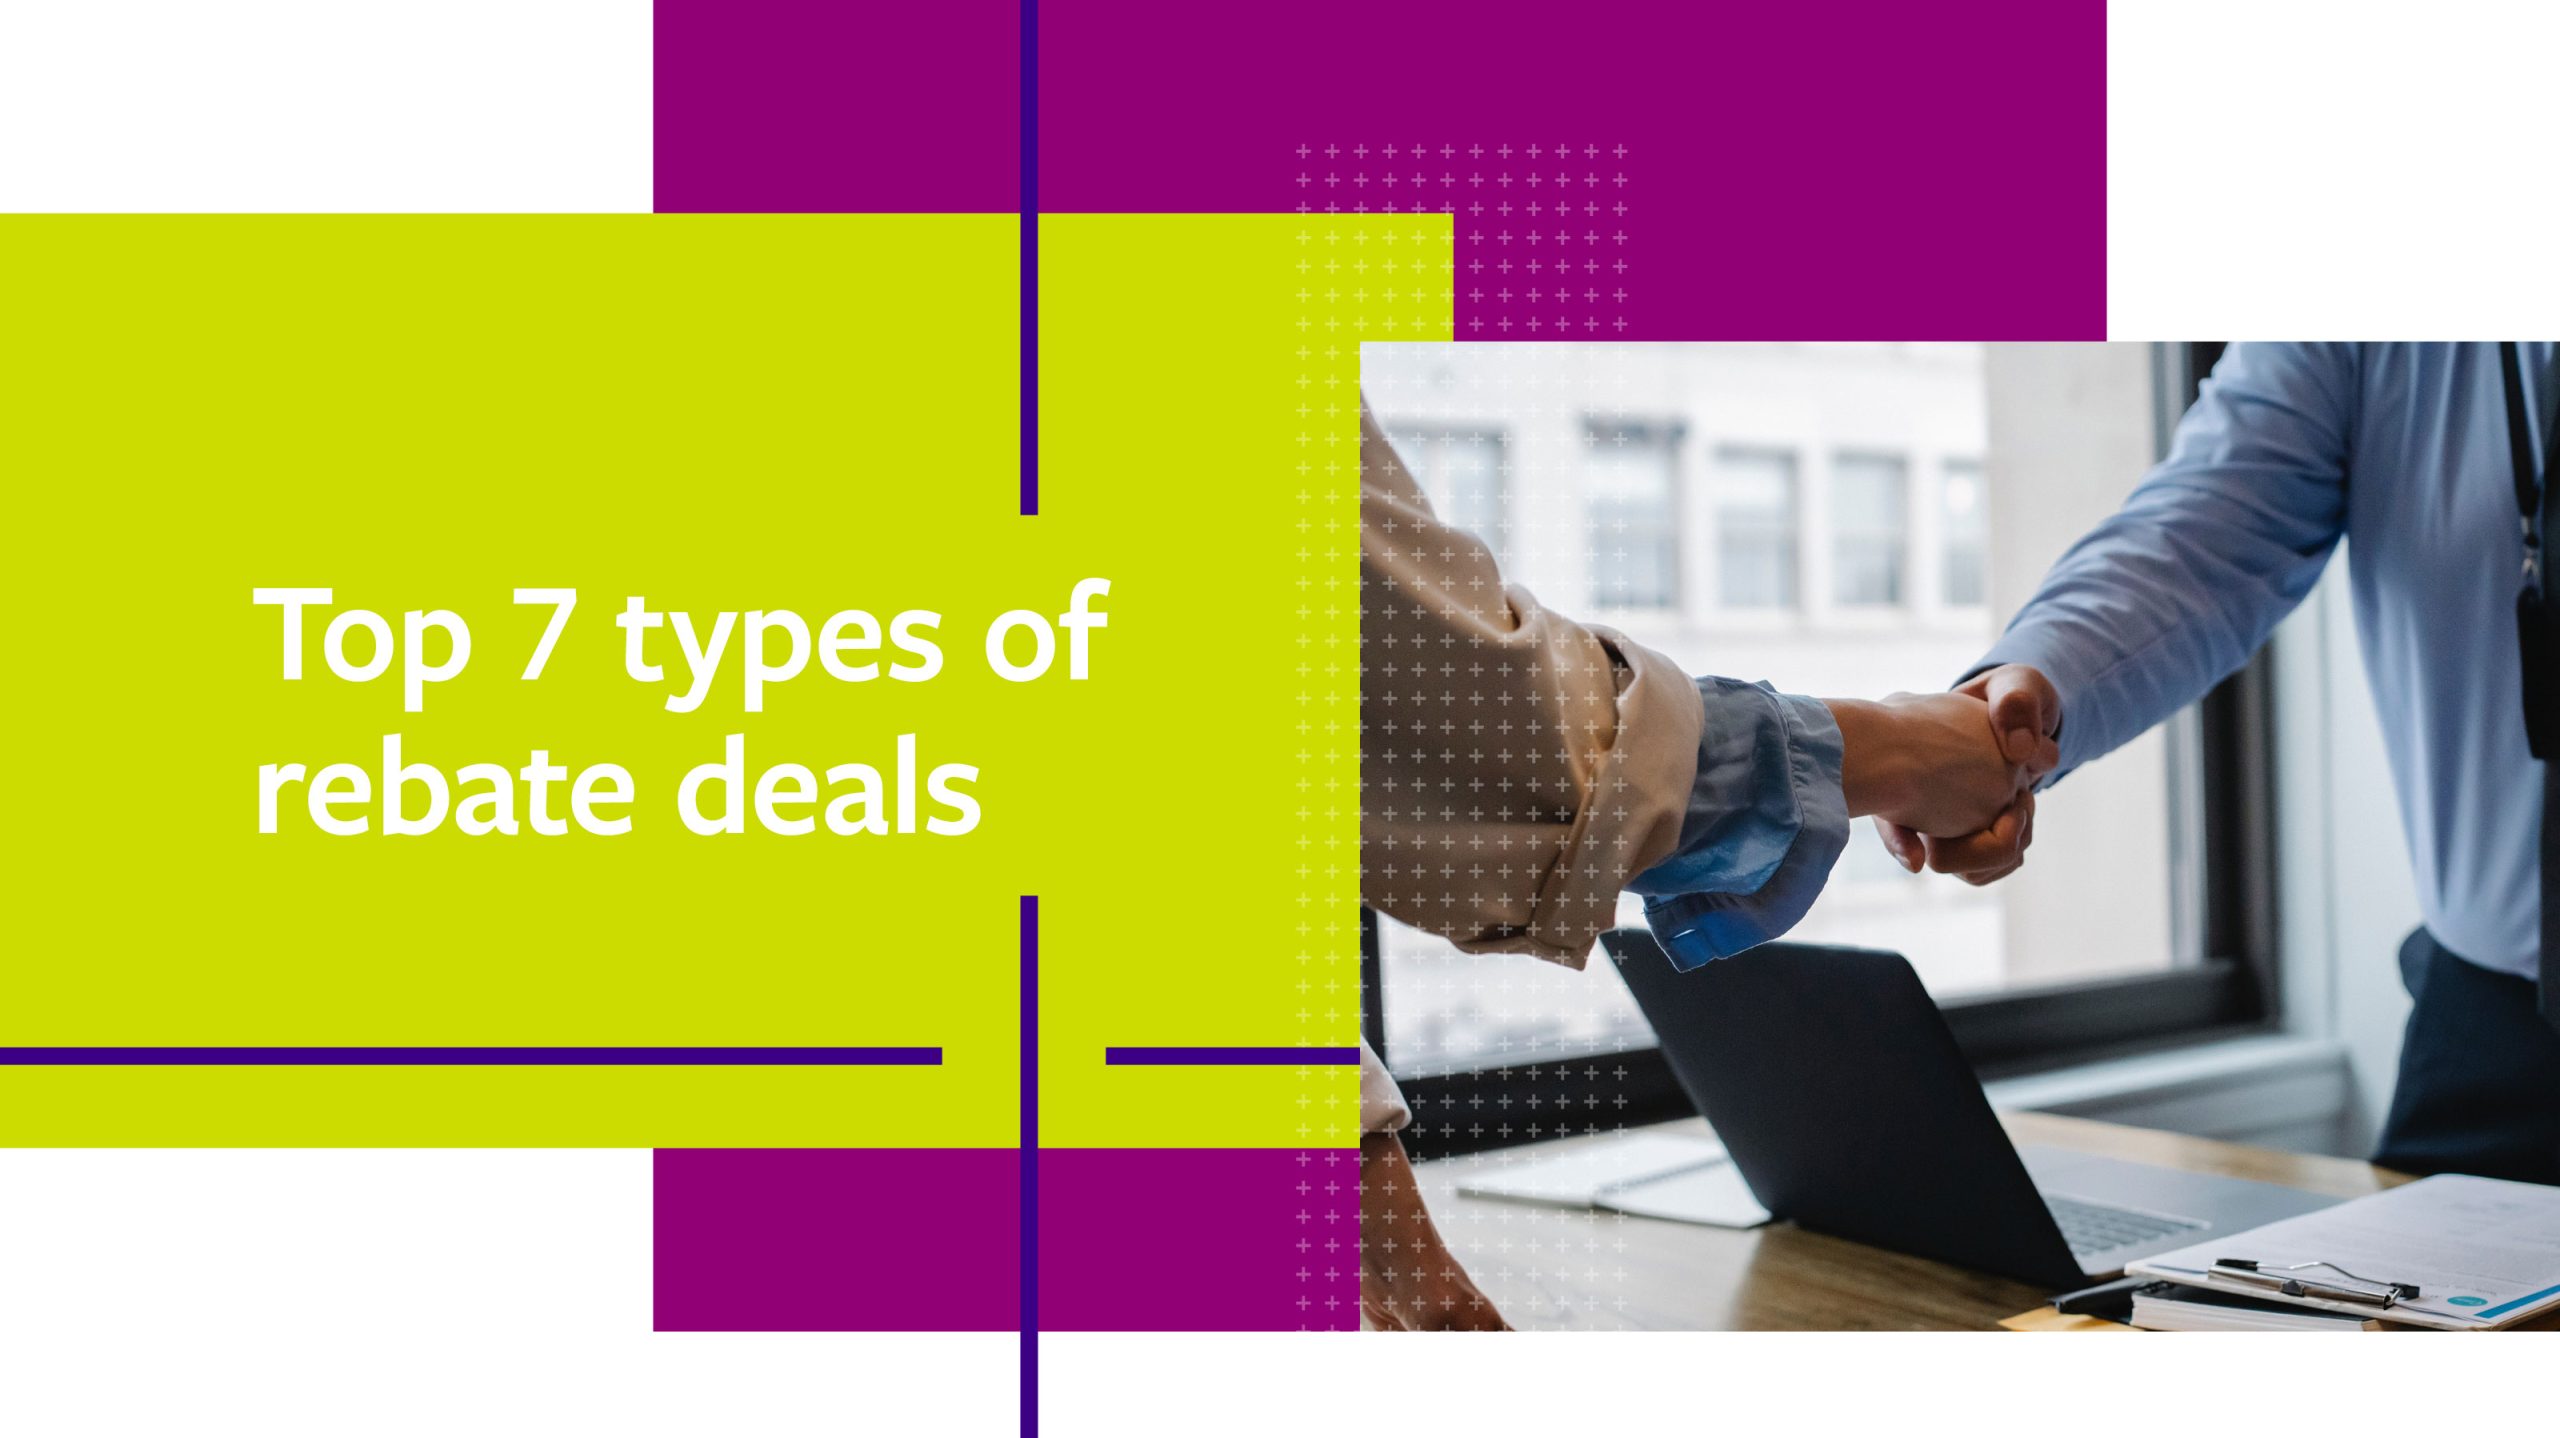 7-types-of-rebate-deals-and-pricing-strategies-for-rebates-b2b